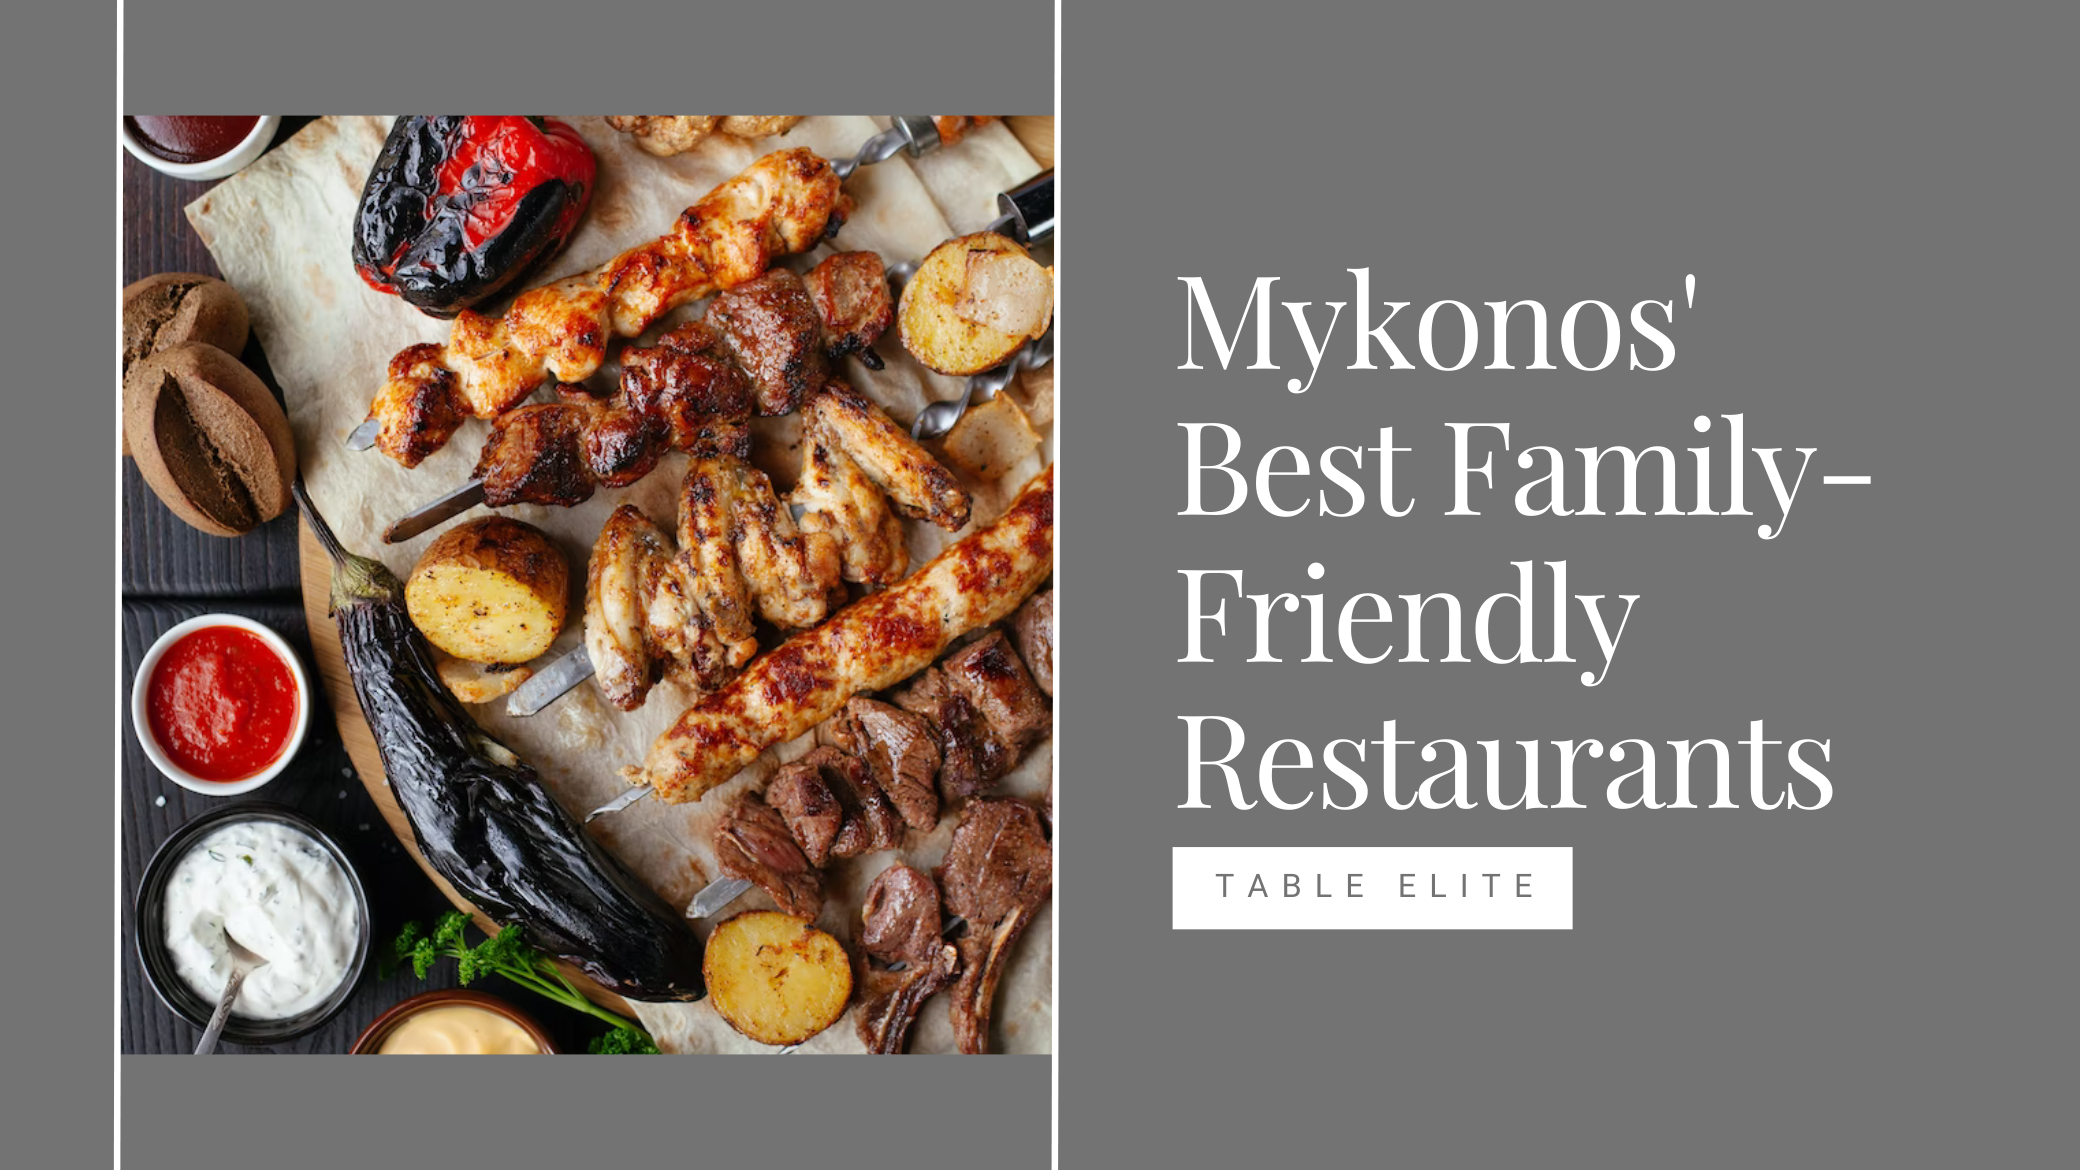 Mykonos' Best Family-Friendly Restaurants